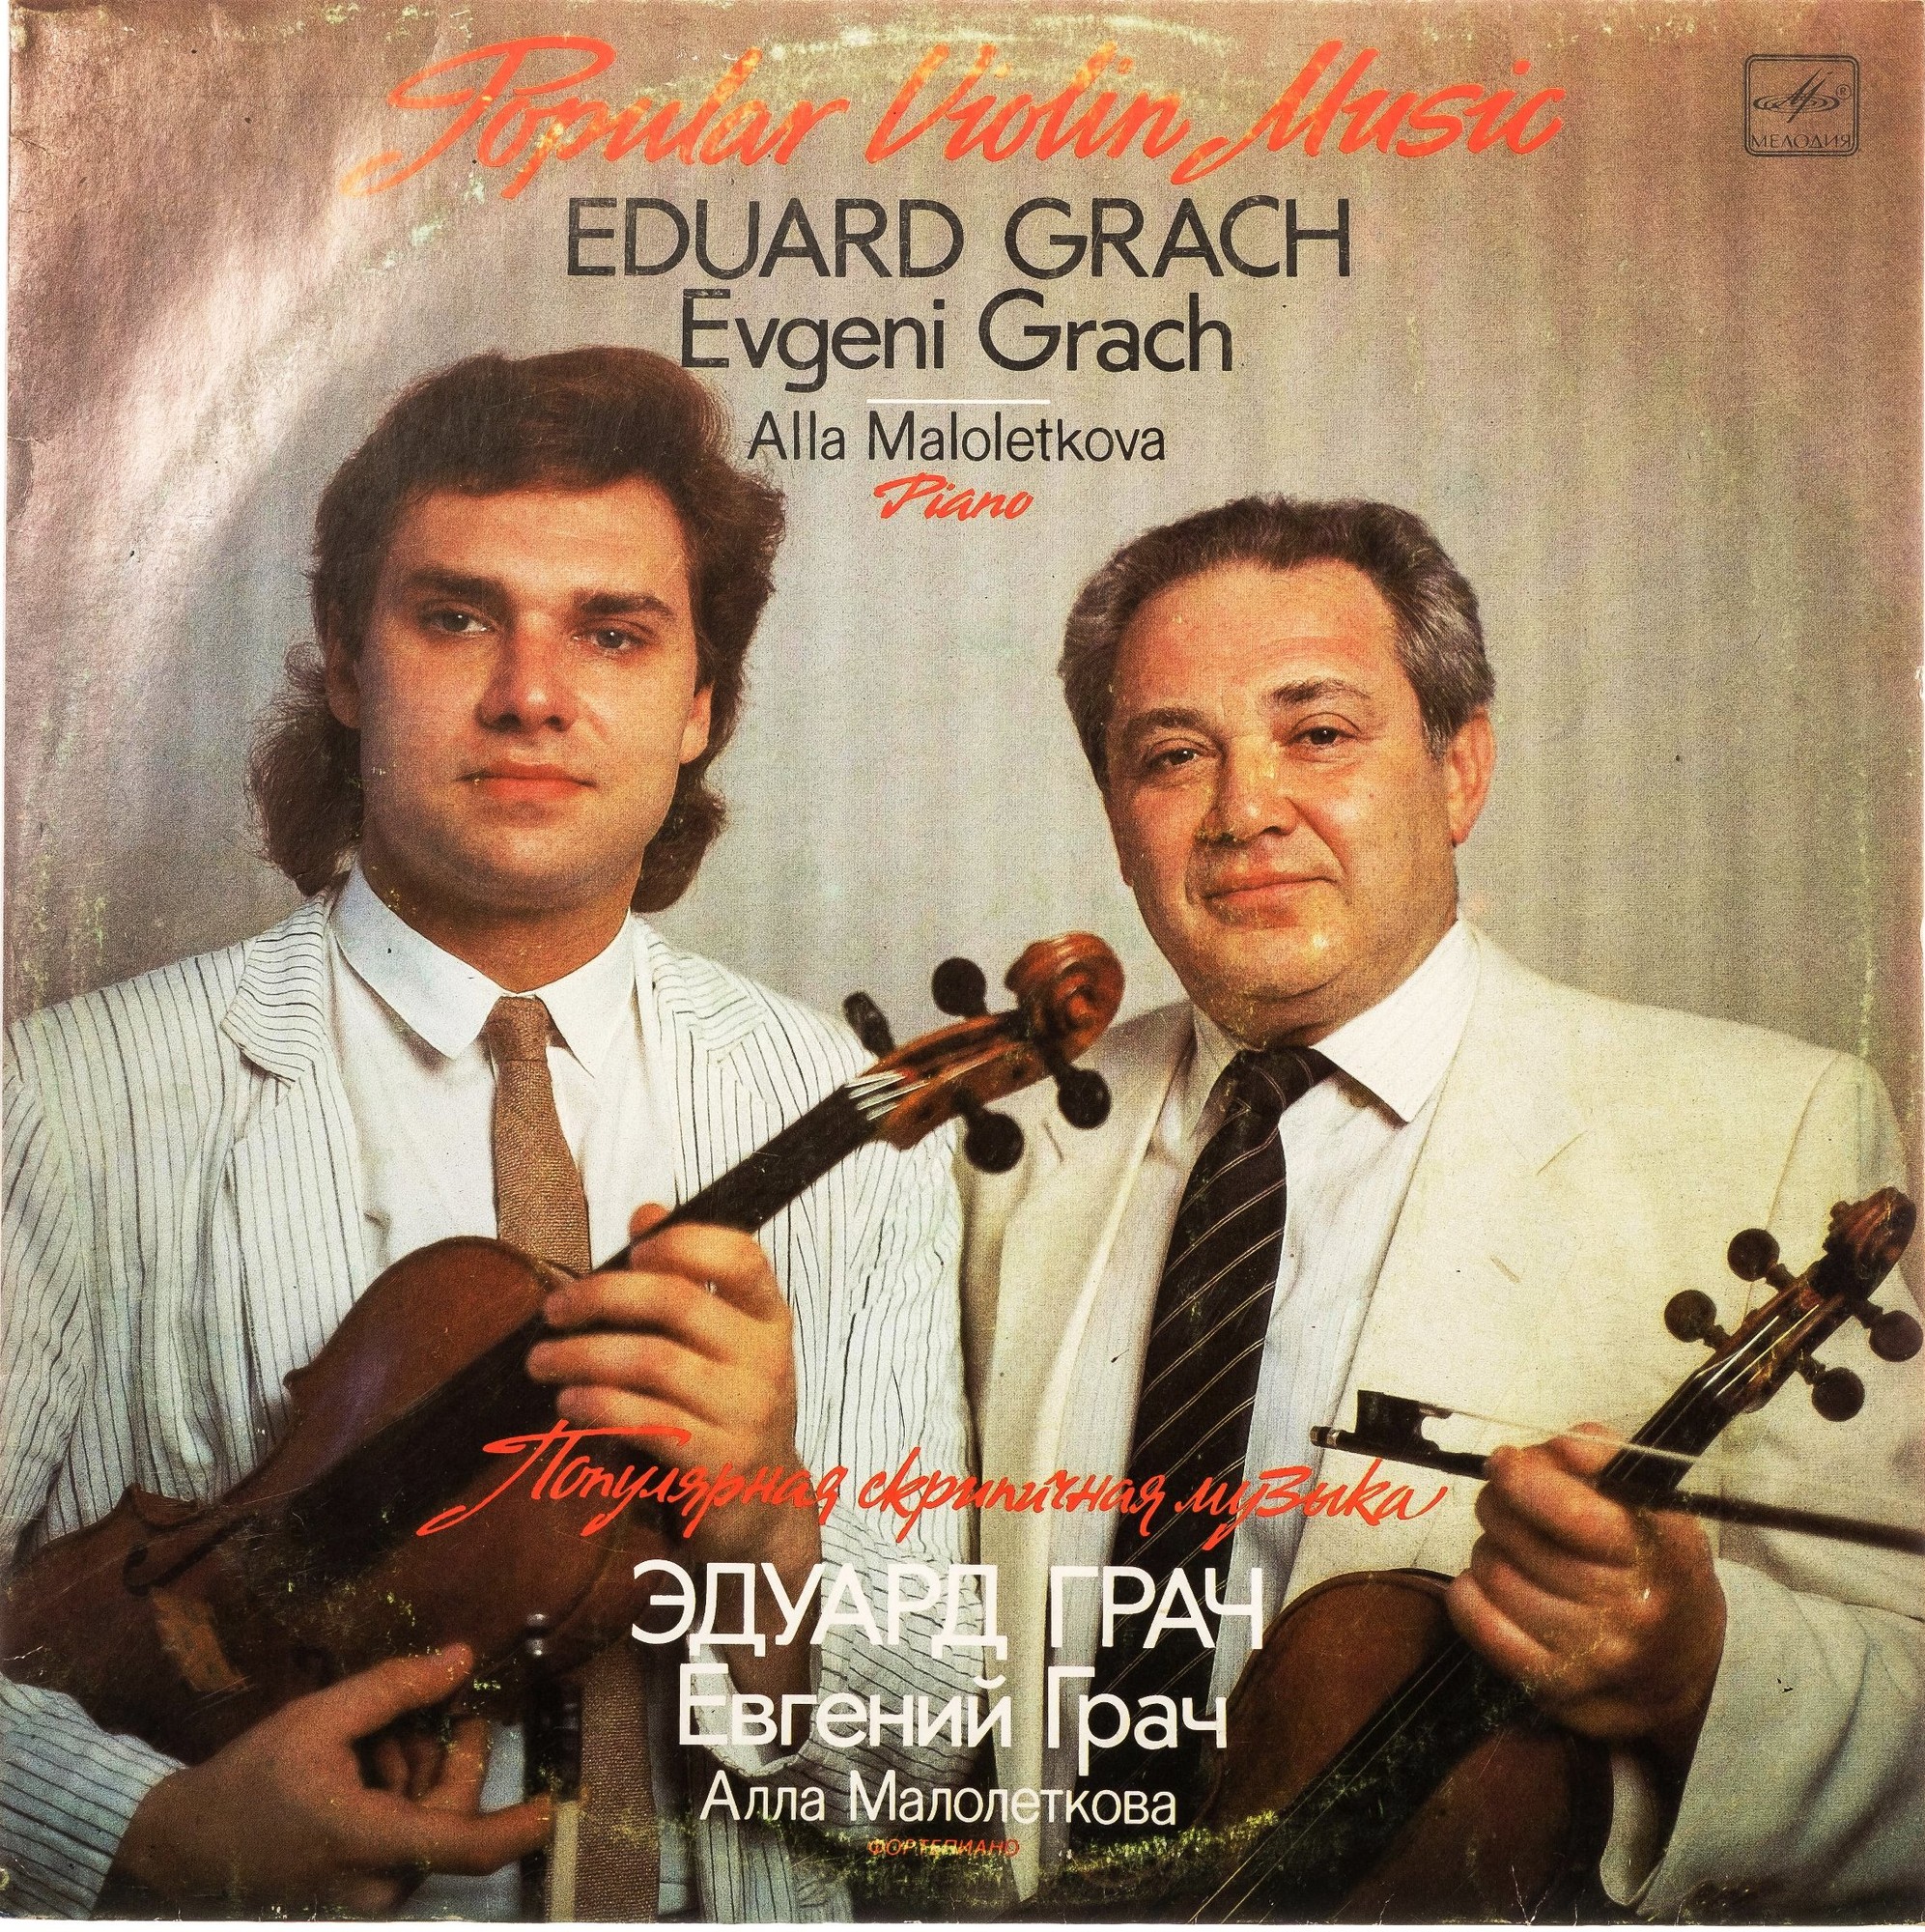 Эдуард ГРАЧ (скрипка, 1930) «Популярная скрипичная музыка»